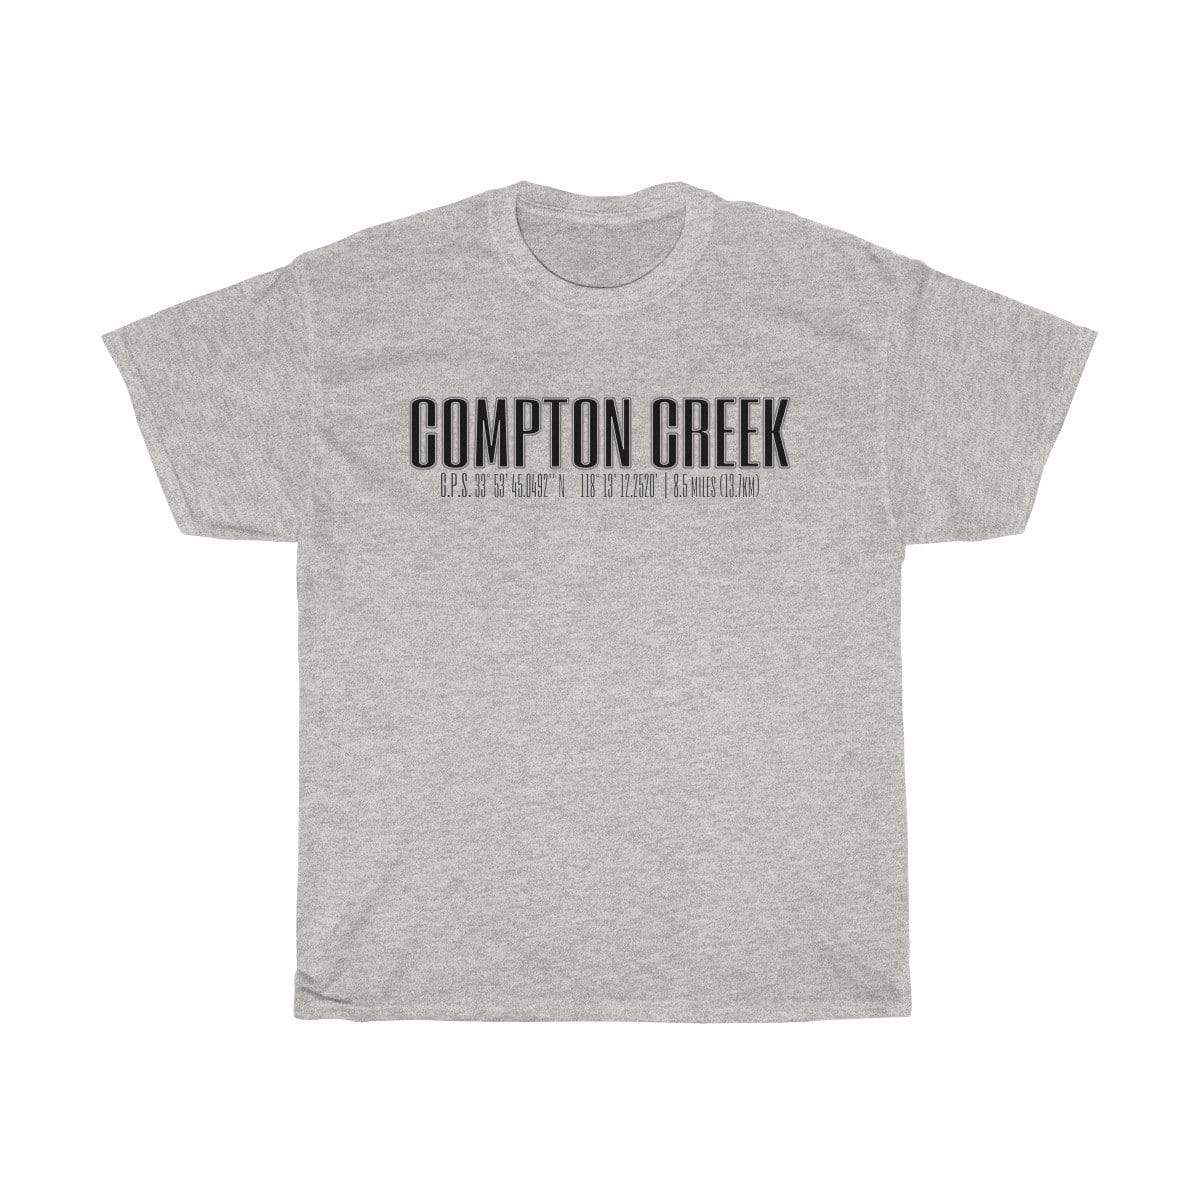 Plumskum T-Shirt Ash / S The Compton Creek GPS T-Shirt